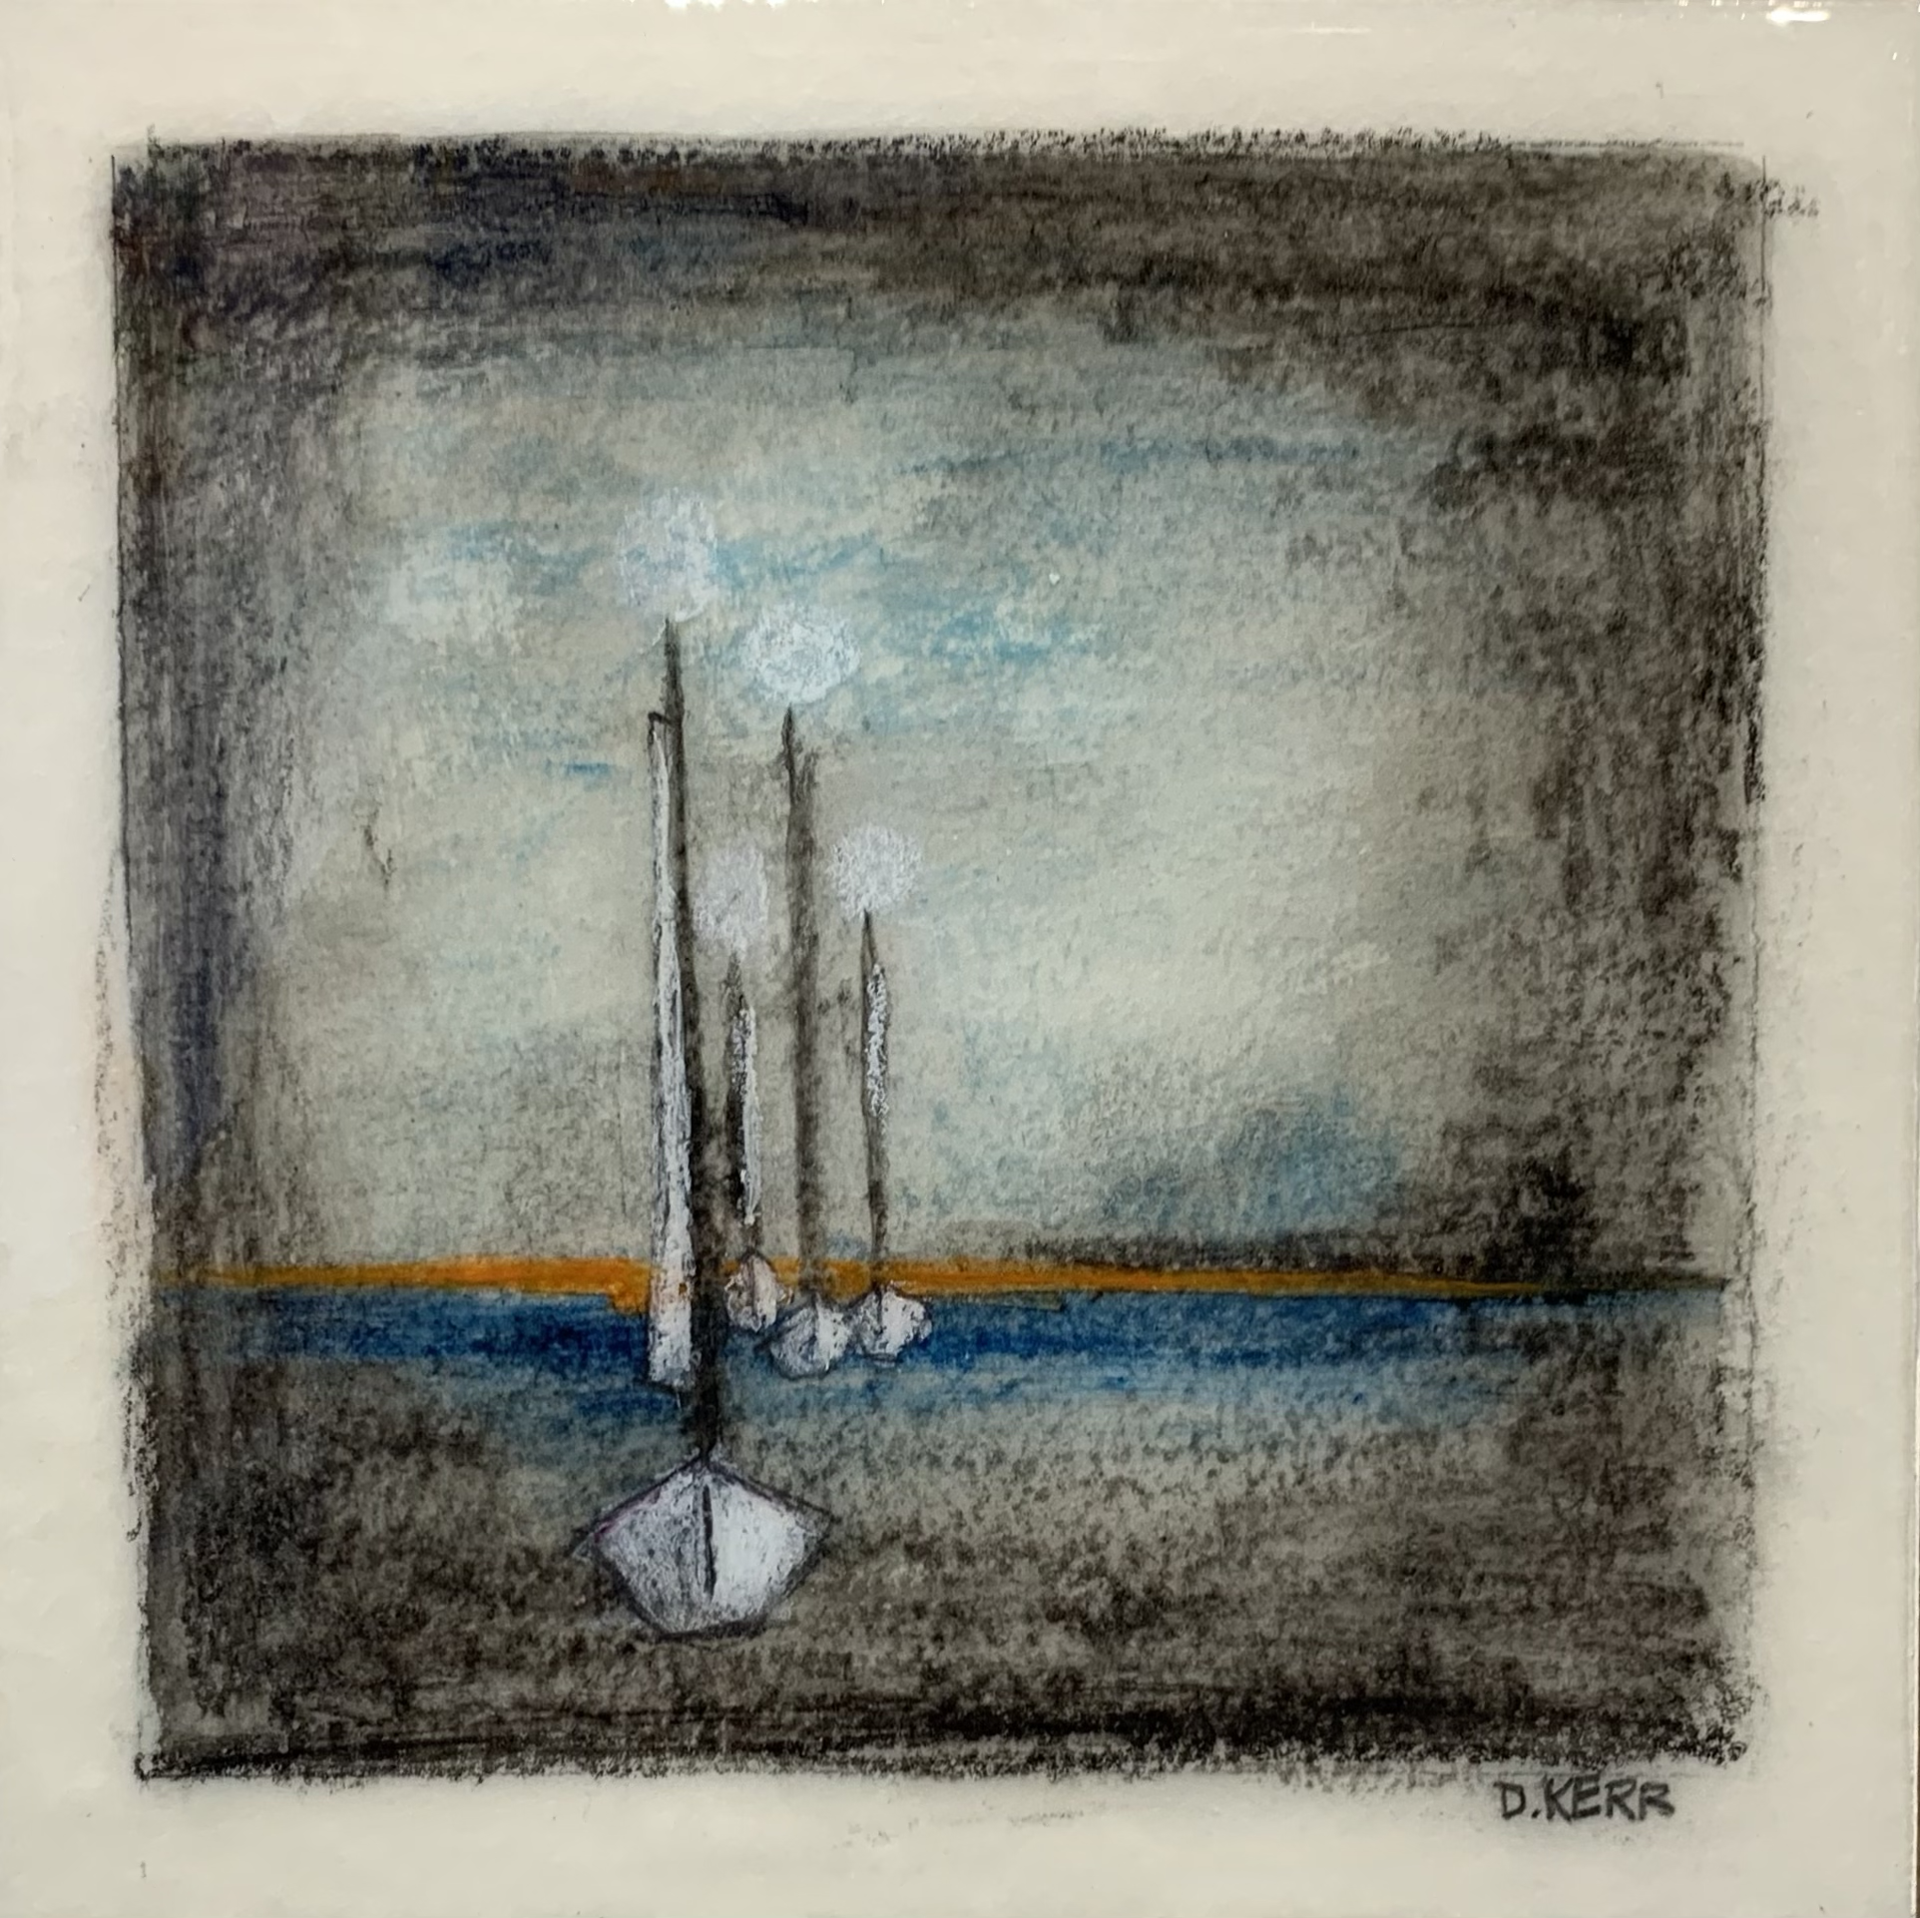 Sailing in a Storm by Deborah Kerr